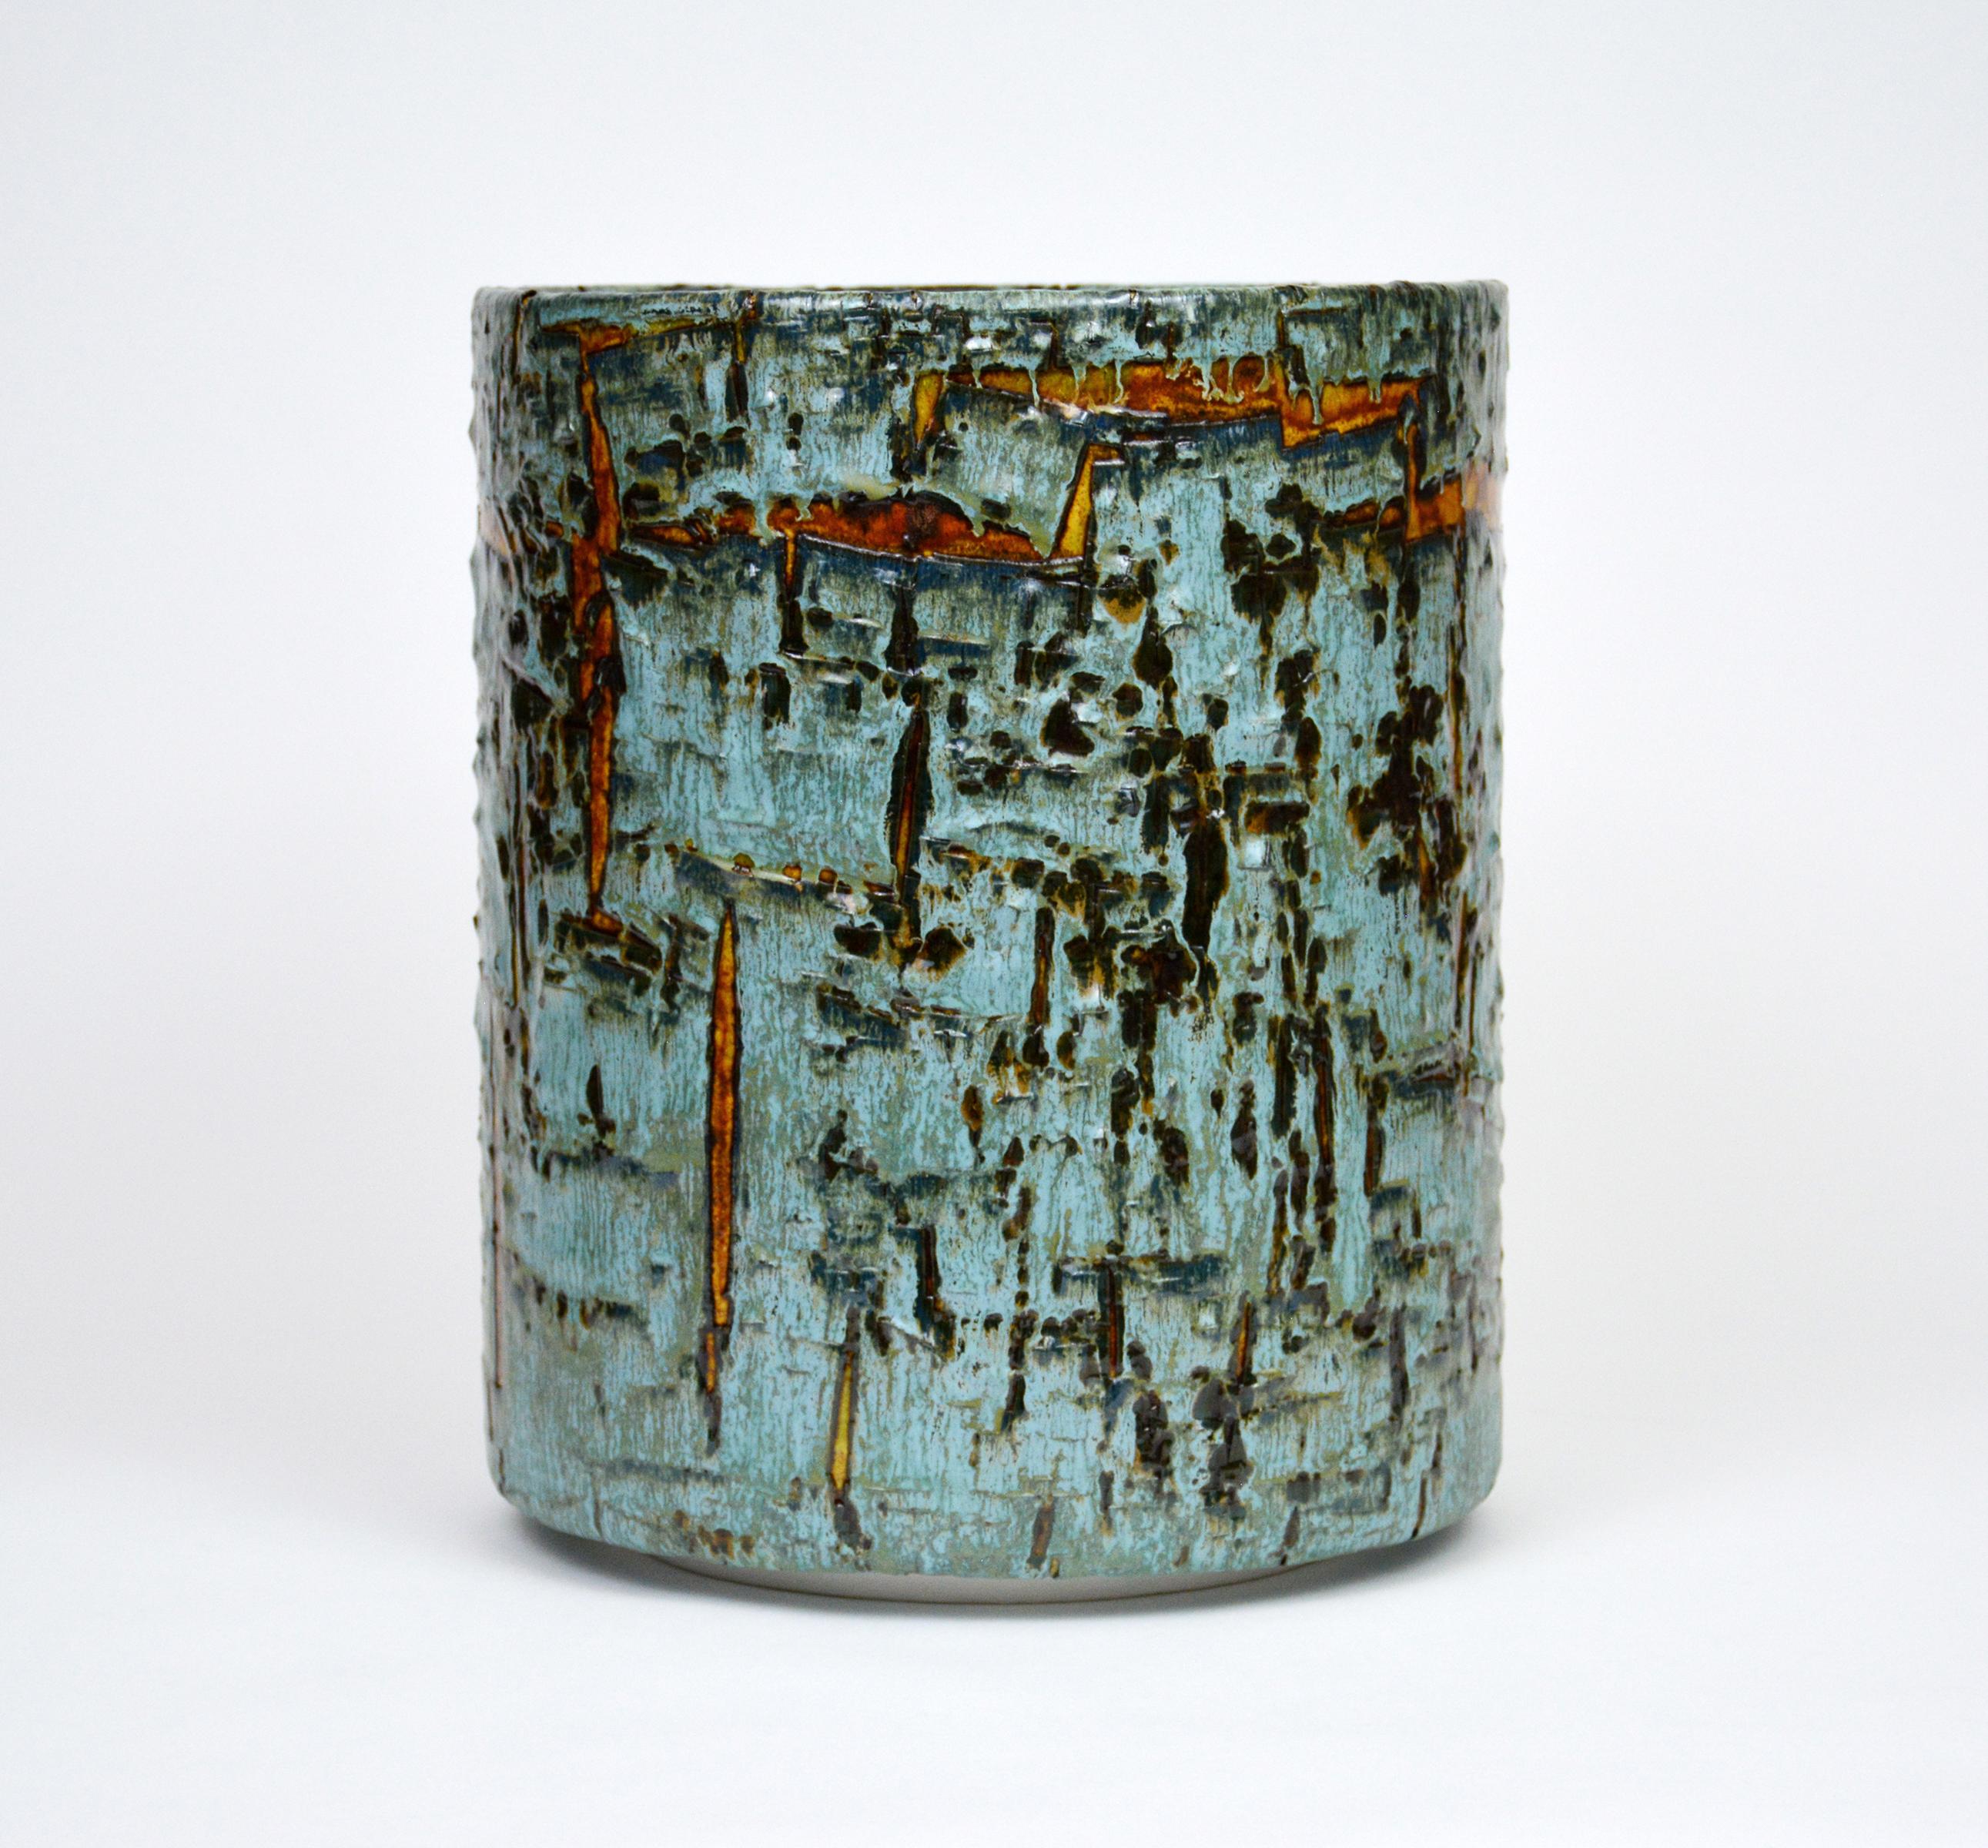 Ceramic Vessel by William Edwards  Cylinder Sculpture  For Sale 1